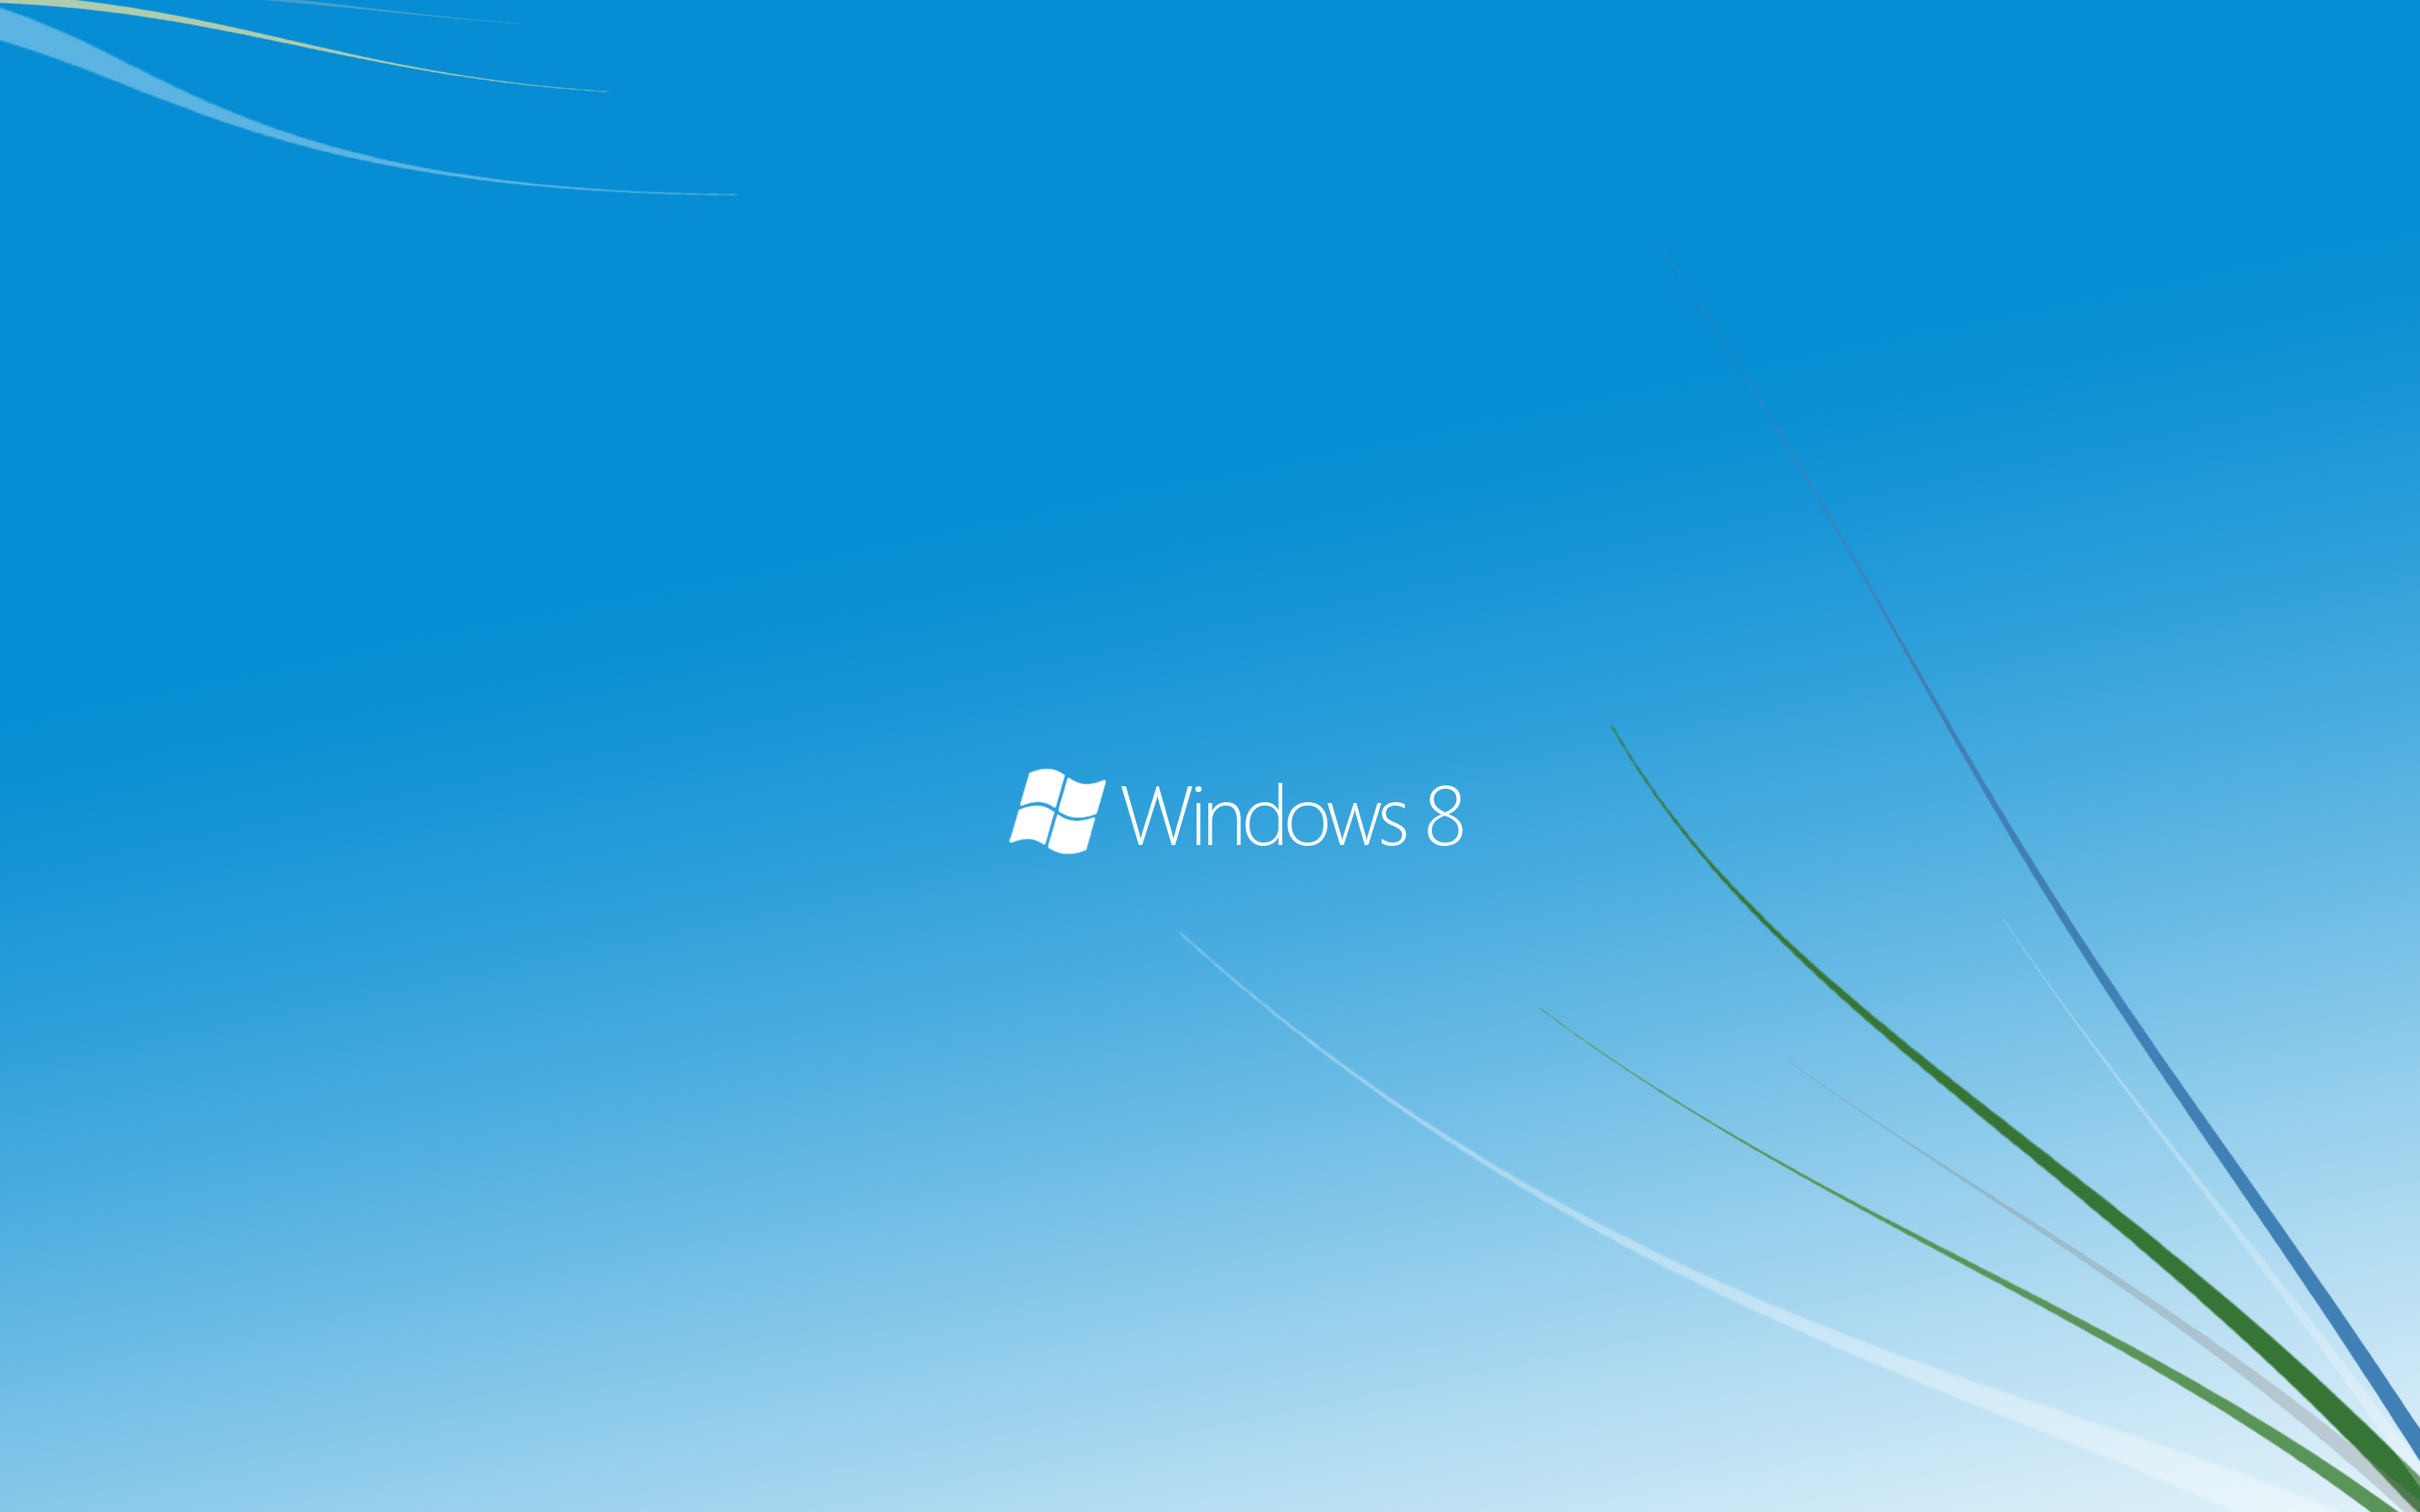 Windows 8 Wallpapers | Download Free Desktop Wallpaper Images ...